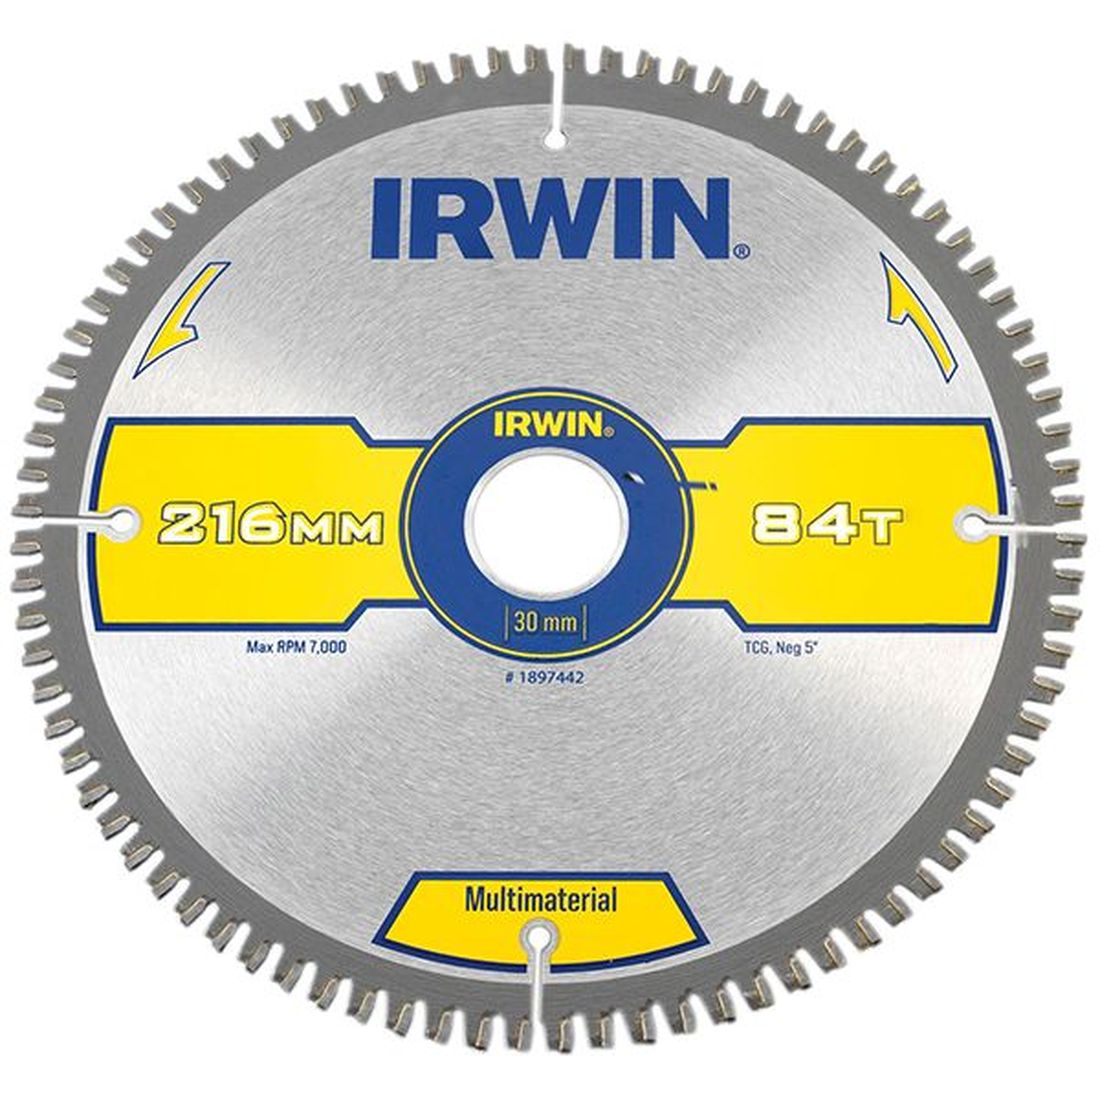 IRWIN Multi Material Circular Saw Blade 216 x 30mm x 84T TCG                          